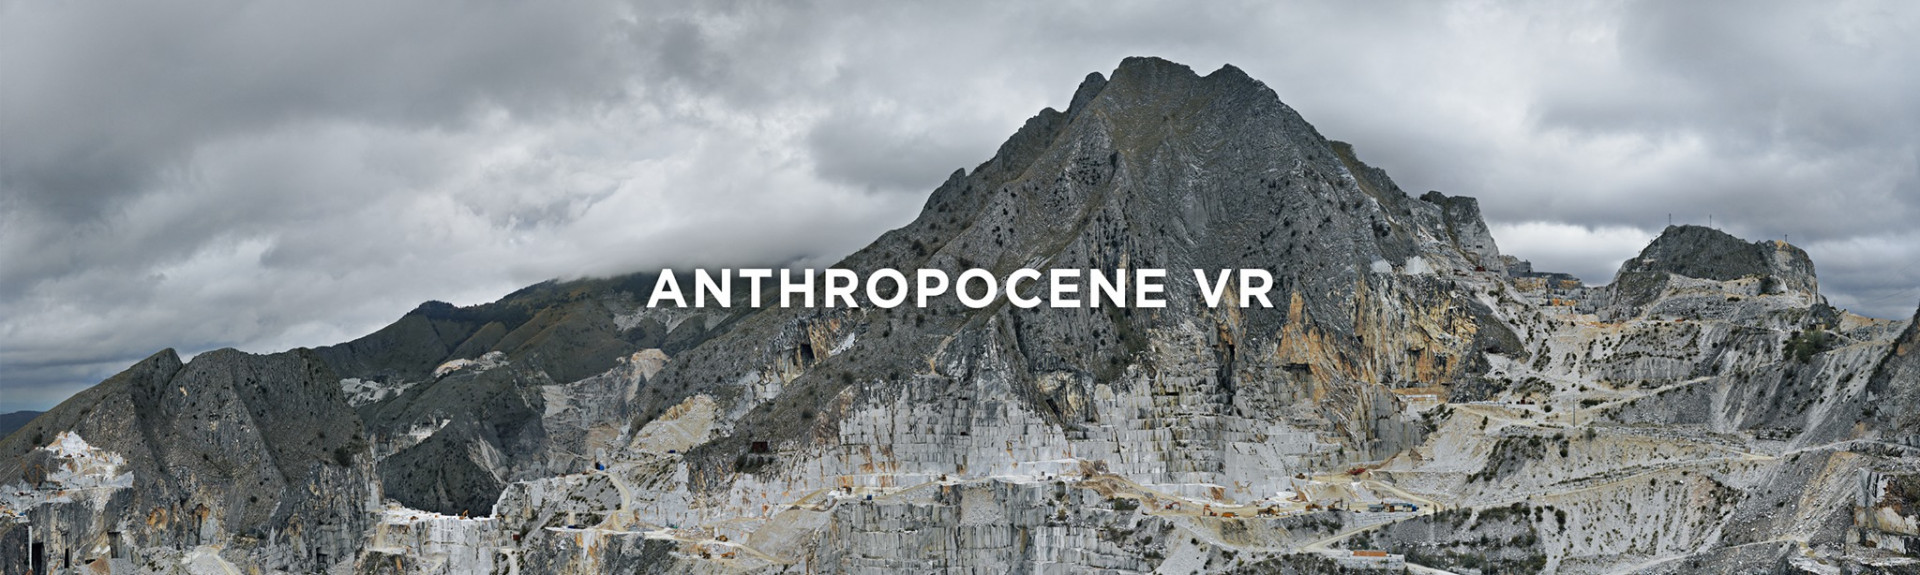 Anthropocene VR